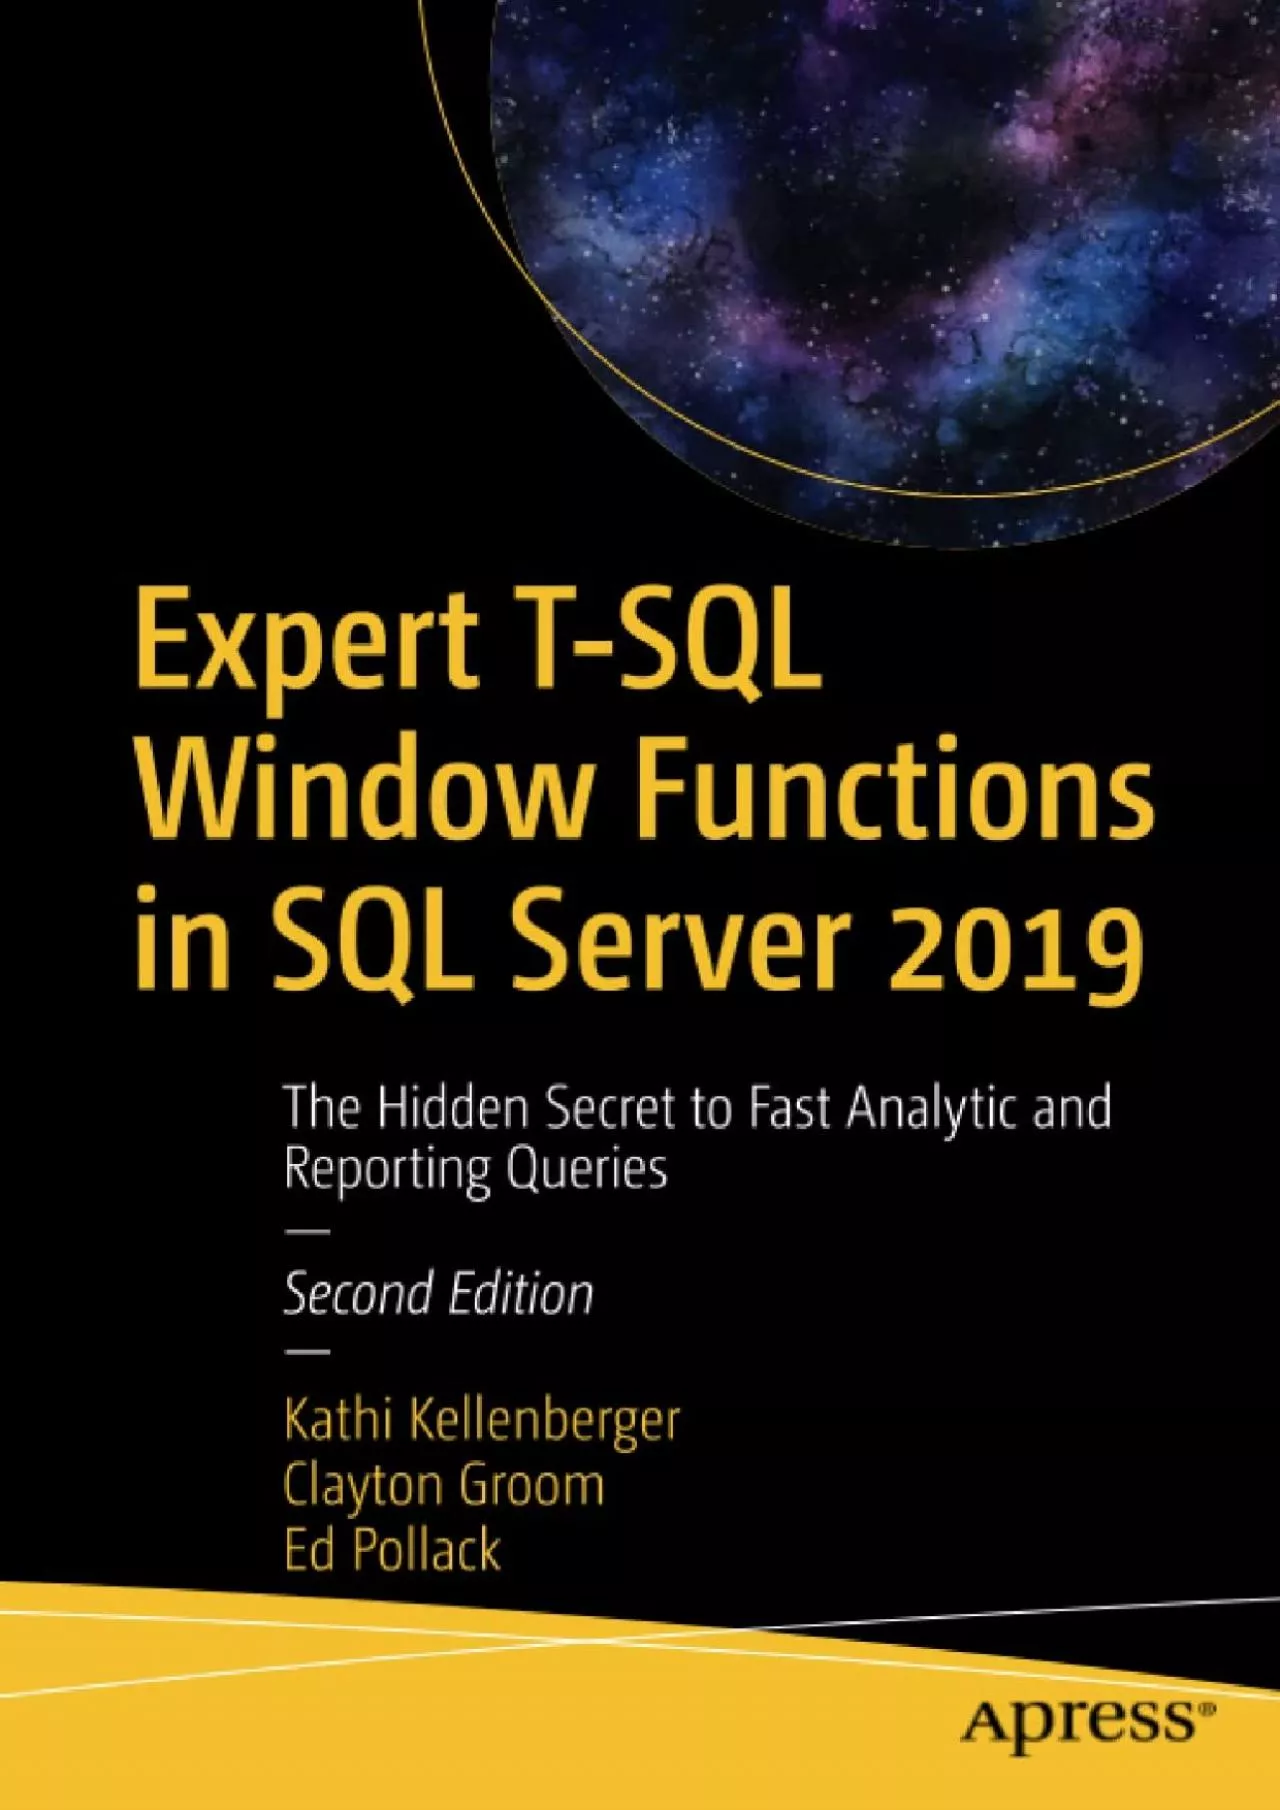 [READING BOOK]-Expert T-SQL Window Functions in SQL Server 2019: The Hidden Secret to